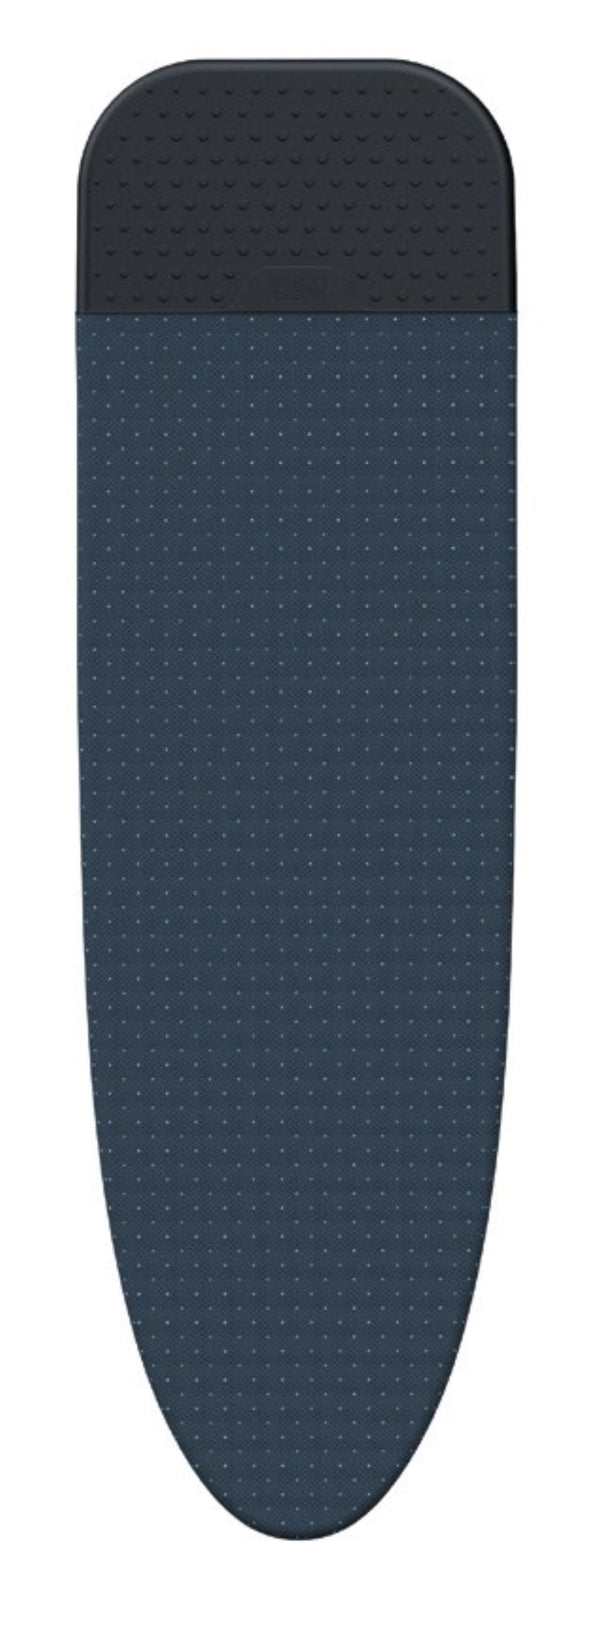 Joseph Joseph Bügelbrettbezug Glide Plus Easy-Store 130x38cm, schwarz blau JJ50008